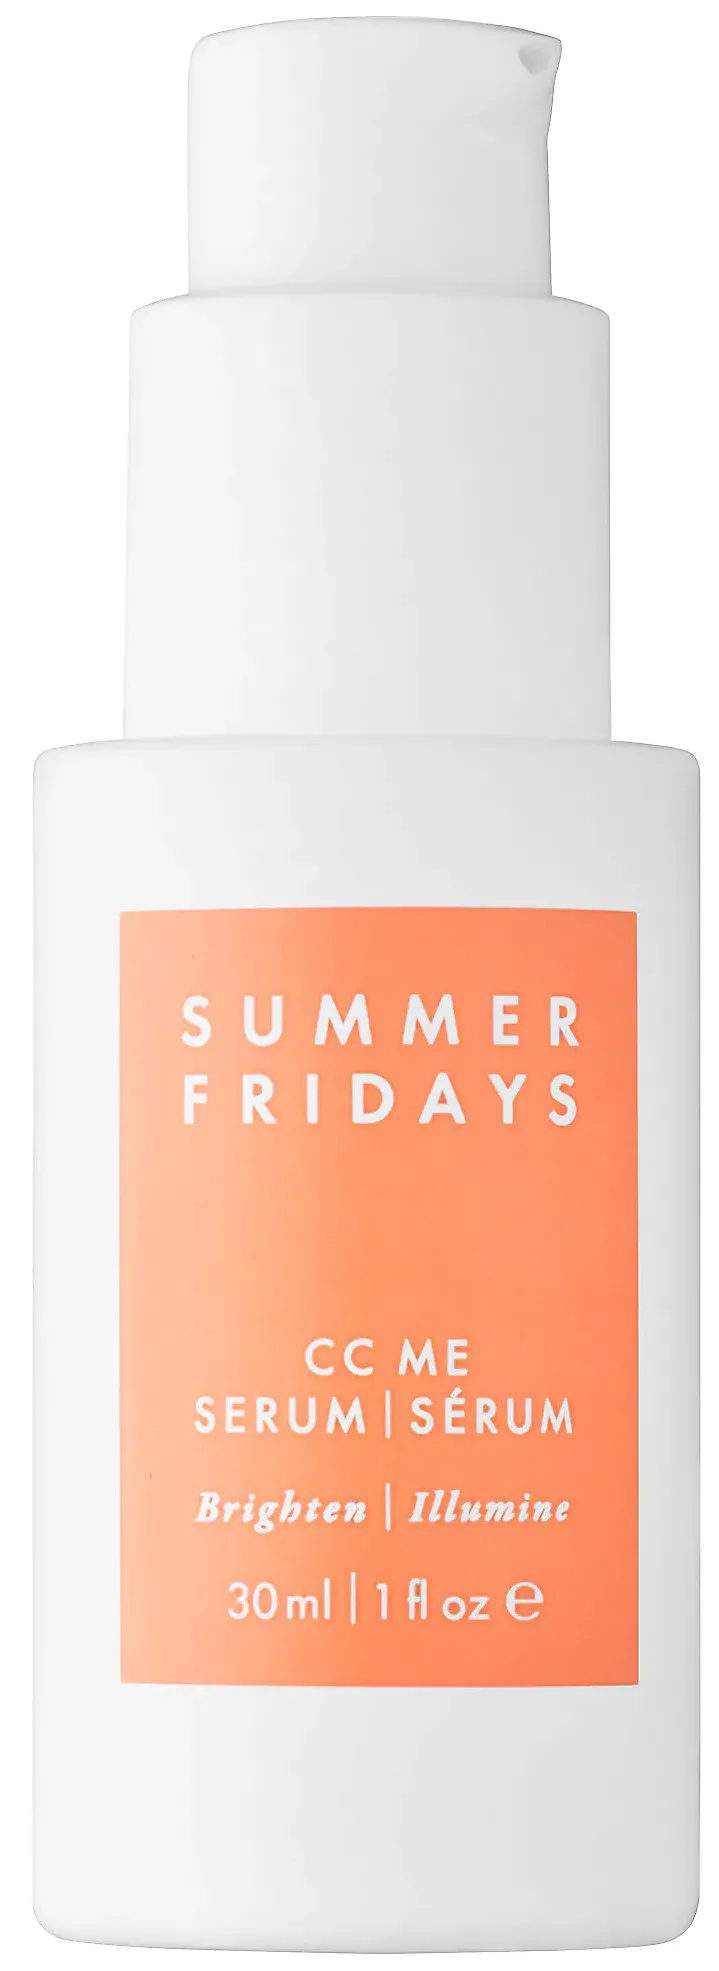 Summer Fridays CC ME Vitamin C Serum